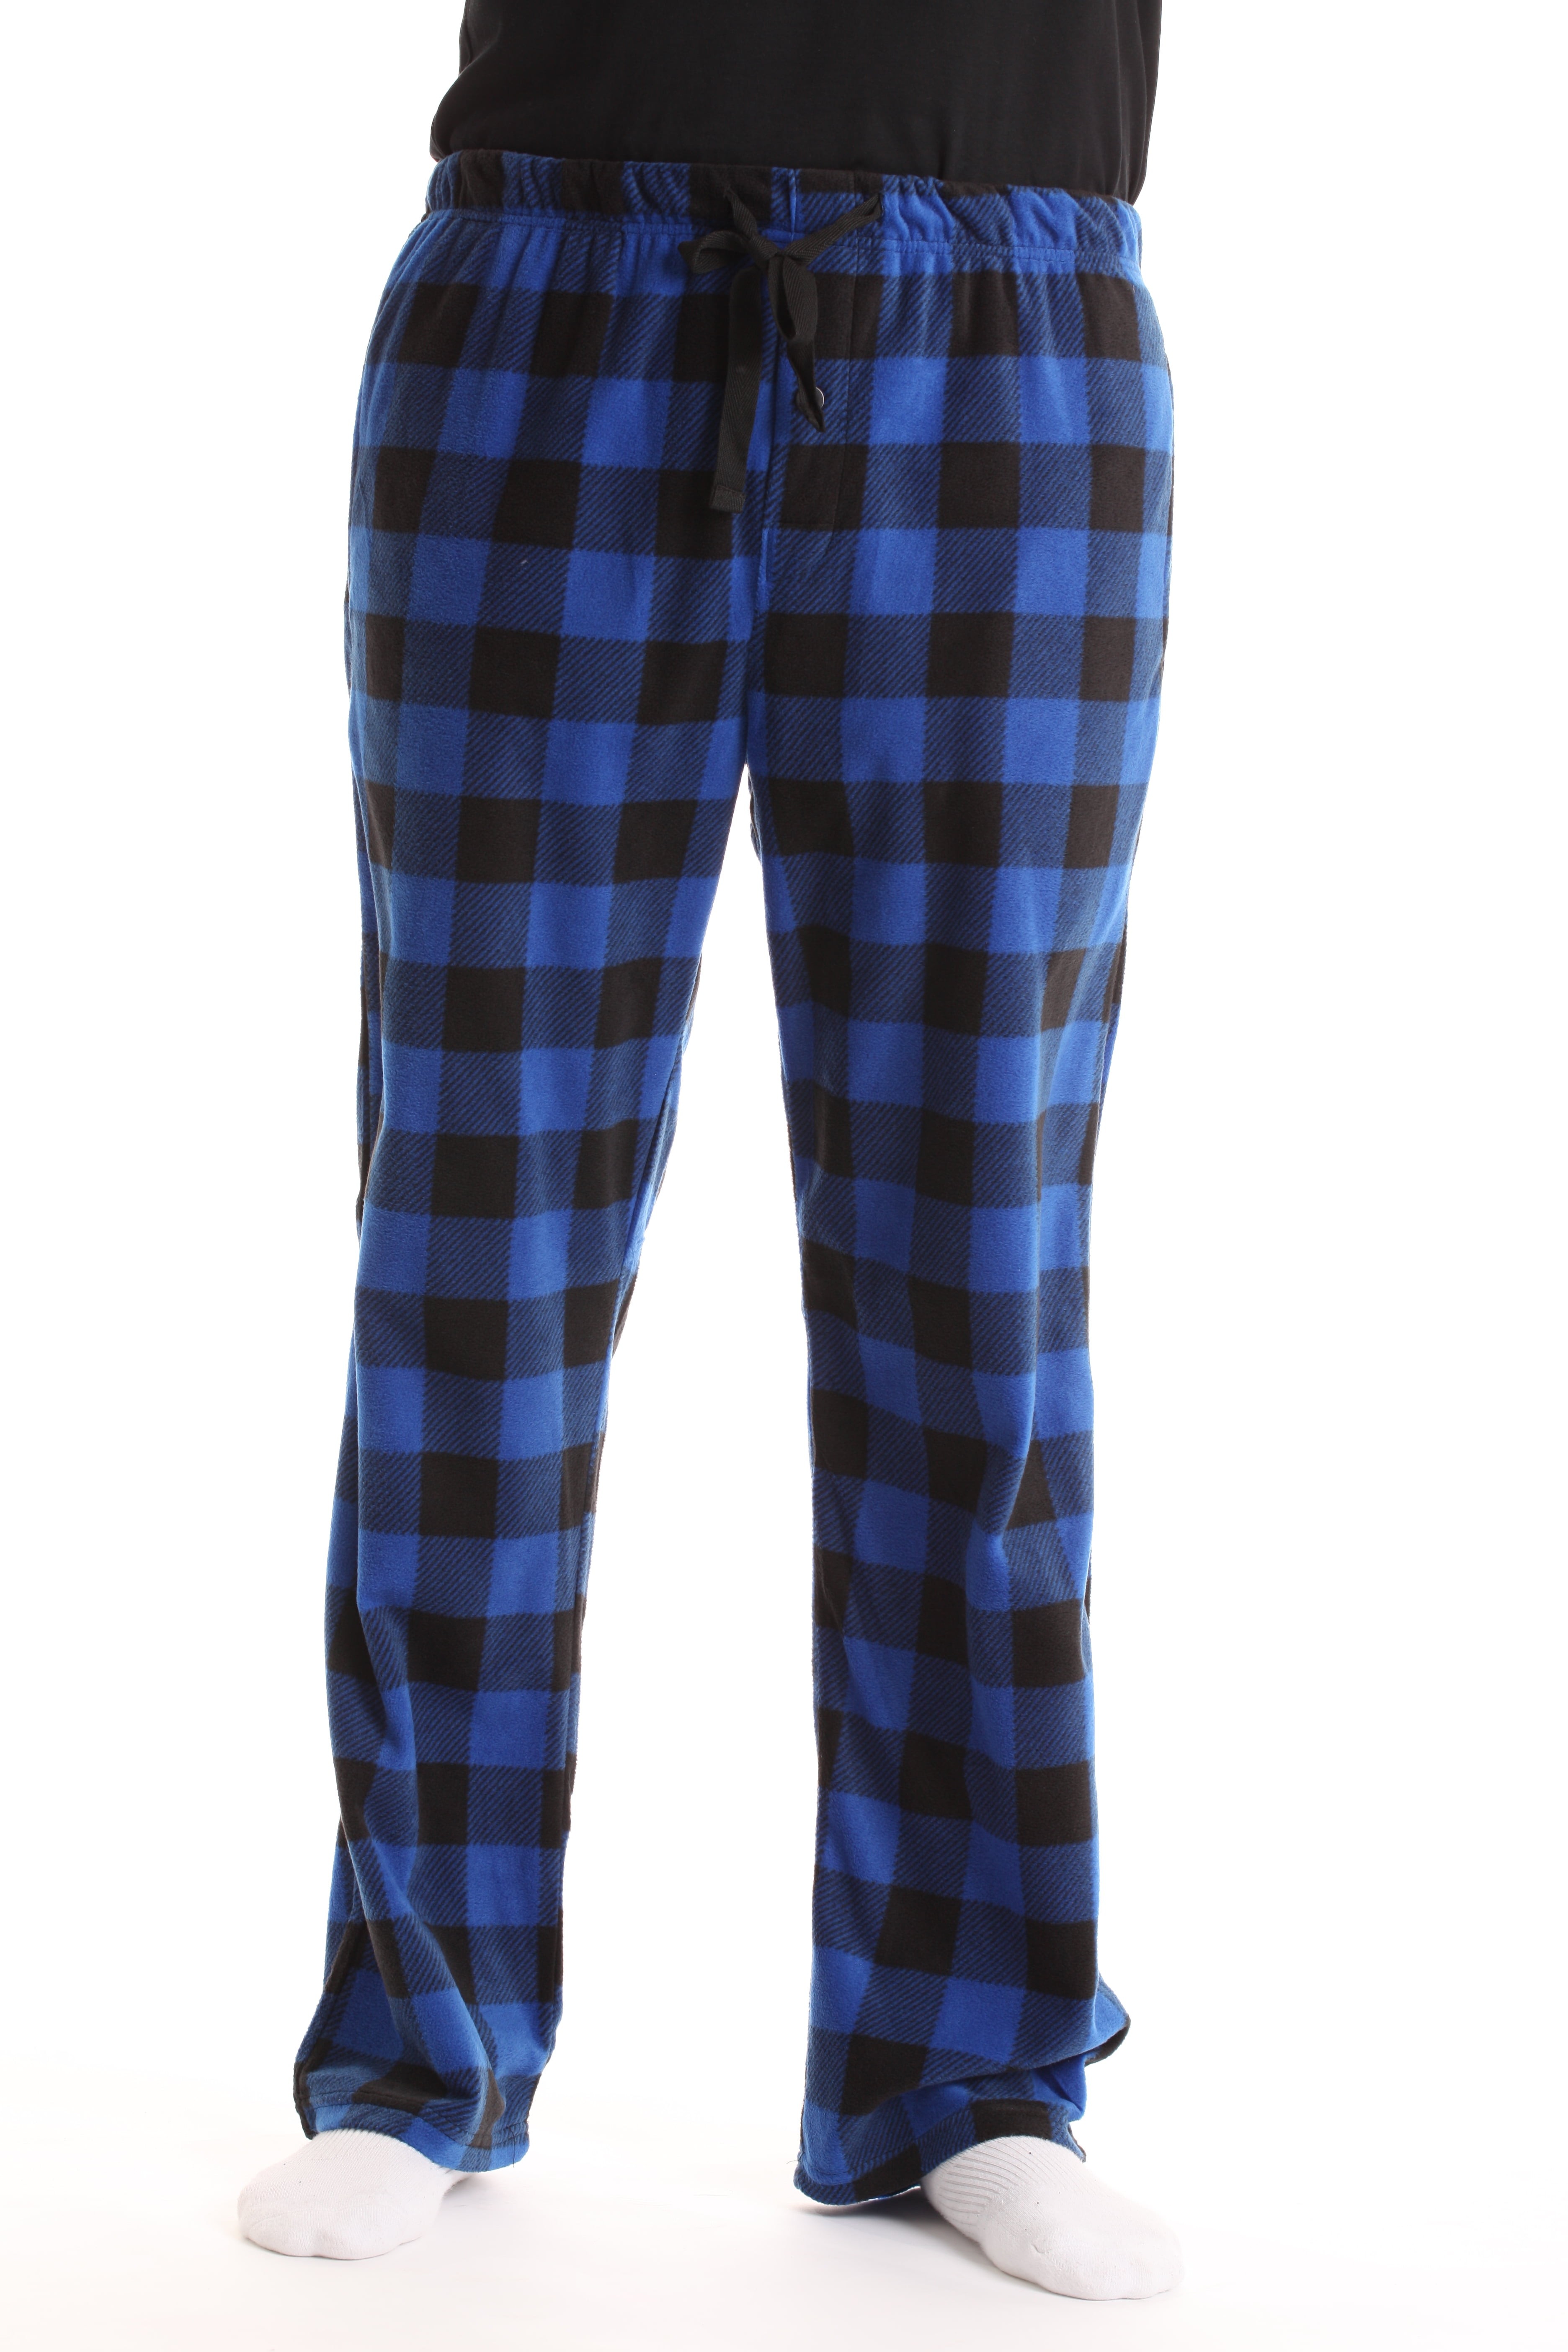 #followme Buffalo Plaid Flannel Pajama Pants for Women with Pockets (White  - Buffalo Plaid, X-Large)